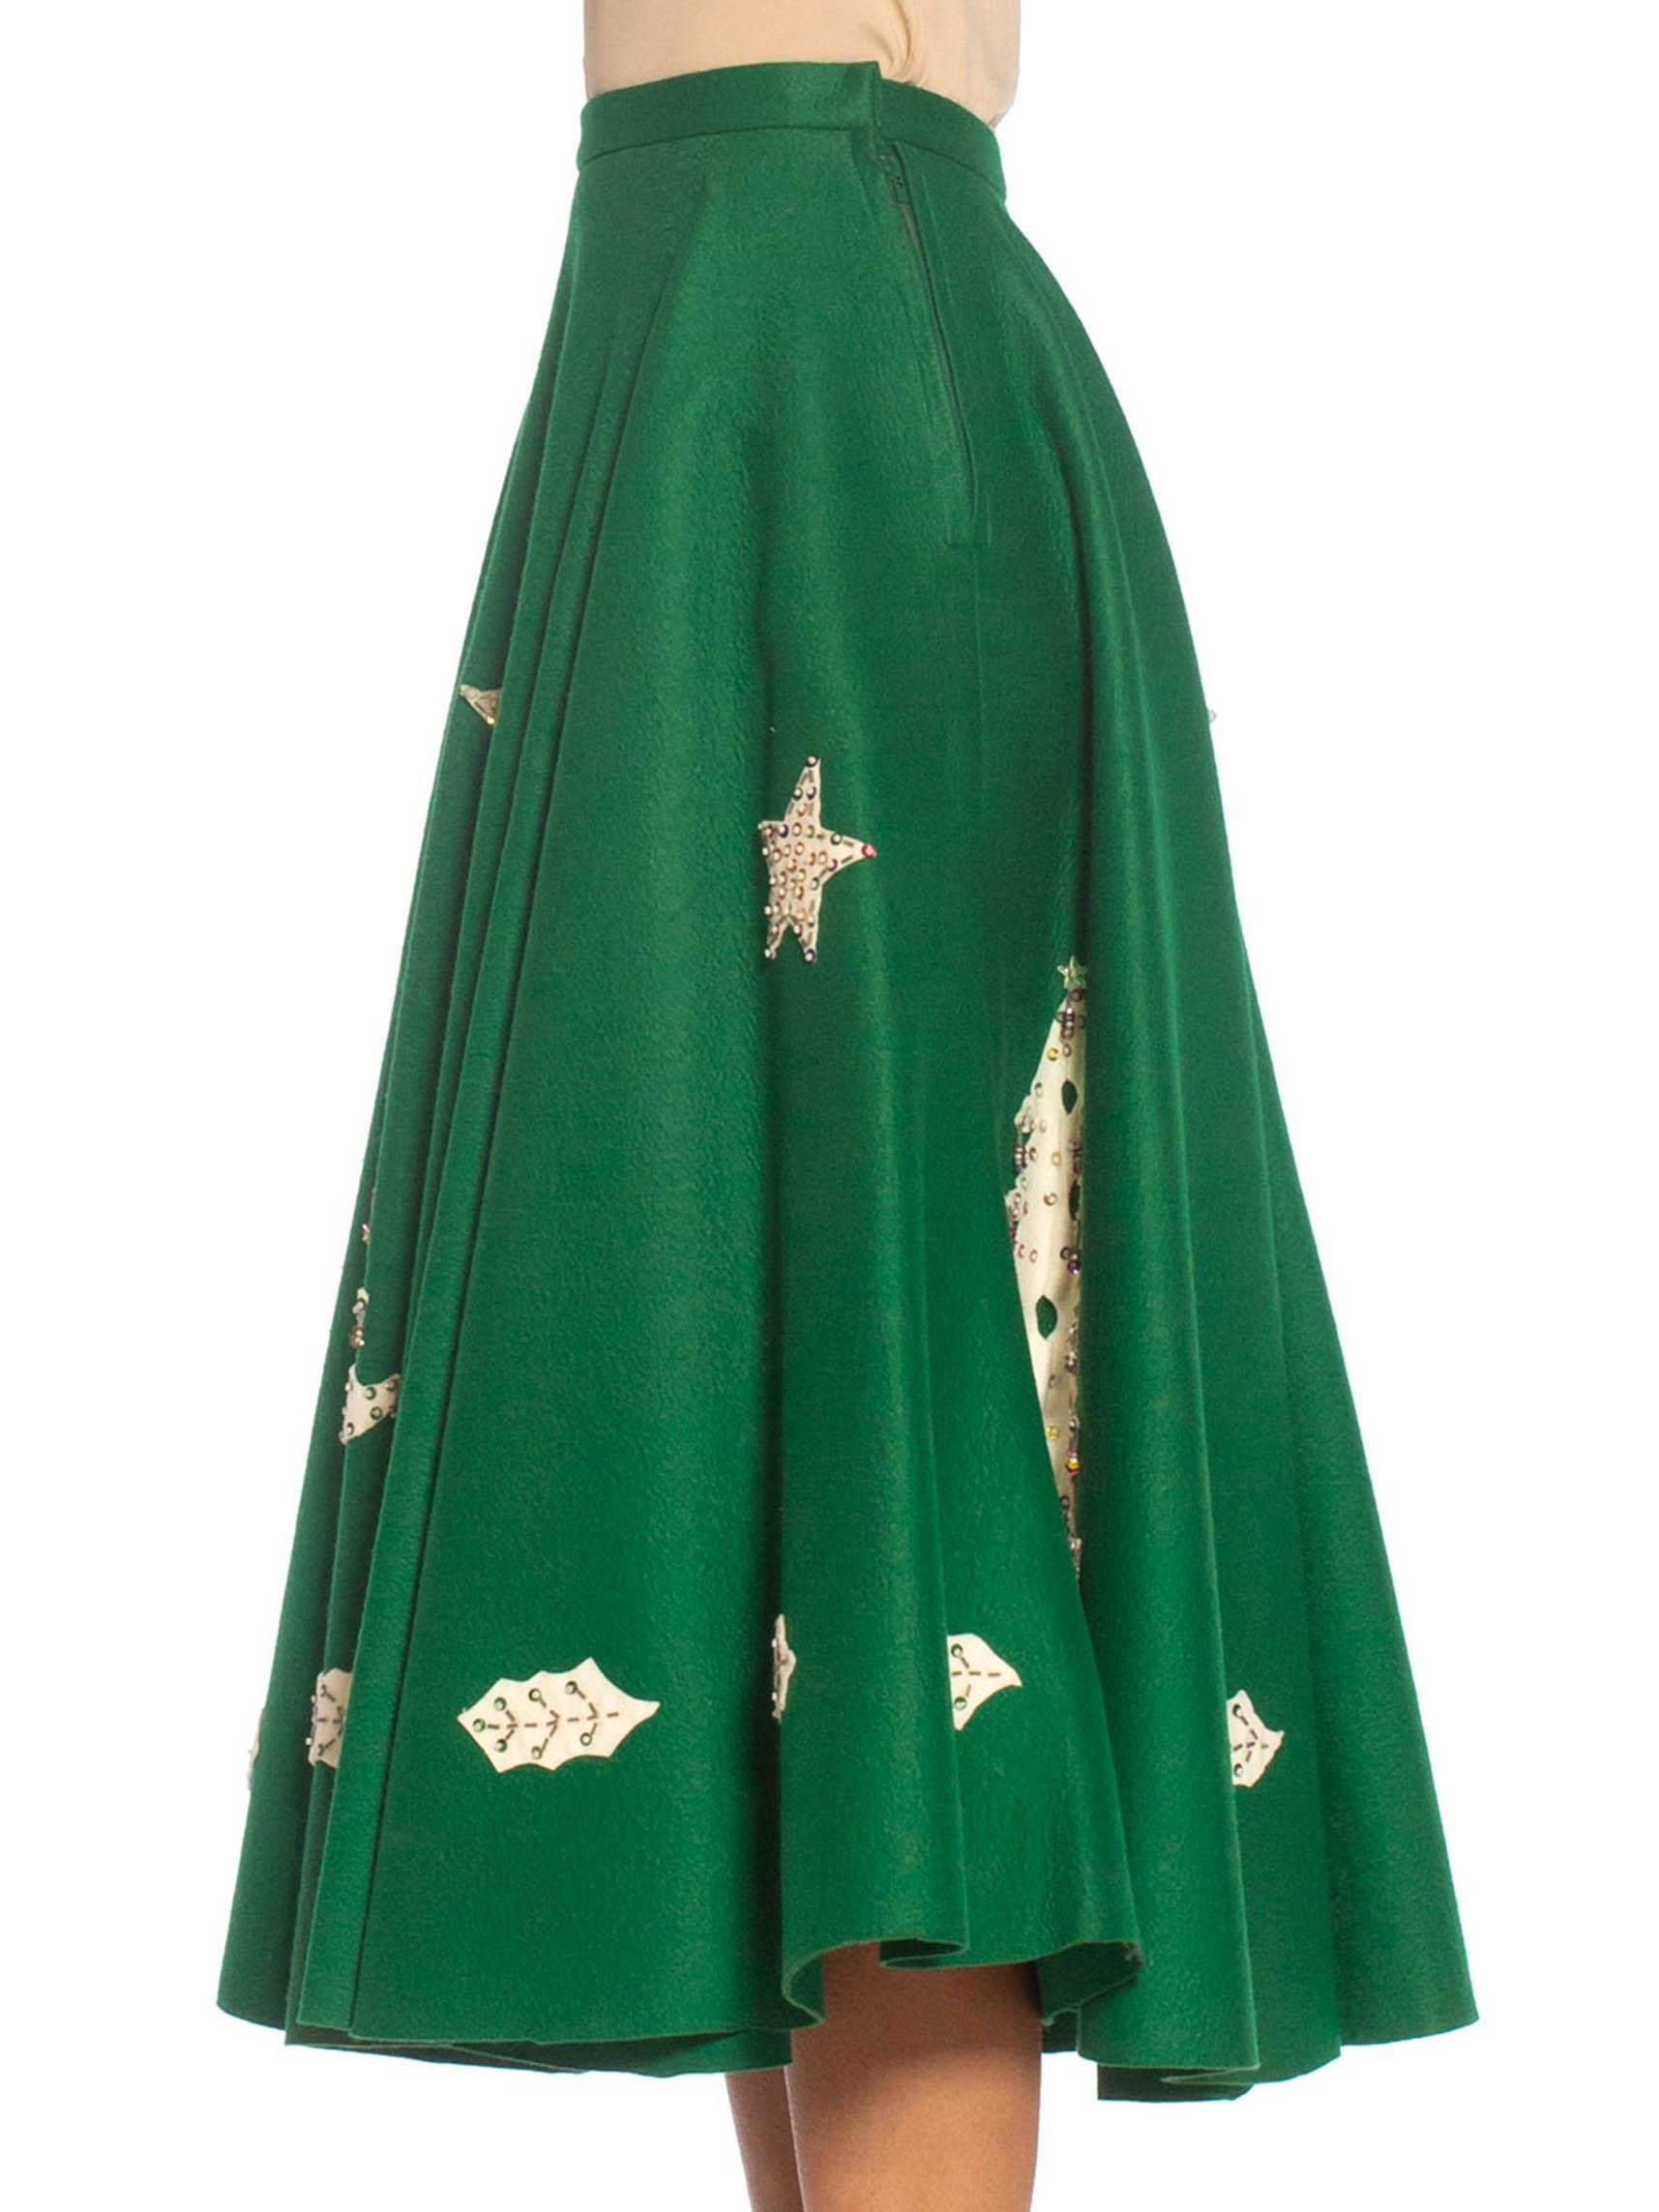 1950s tree skirt